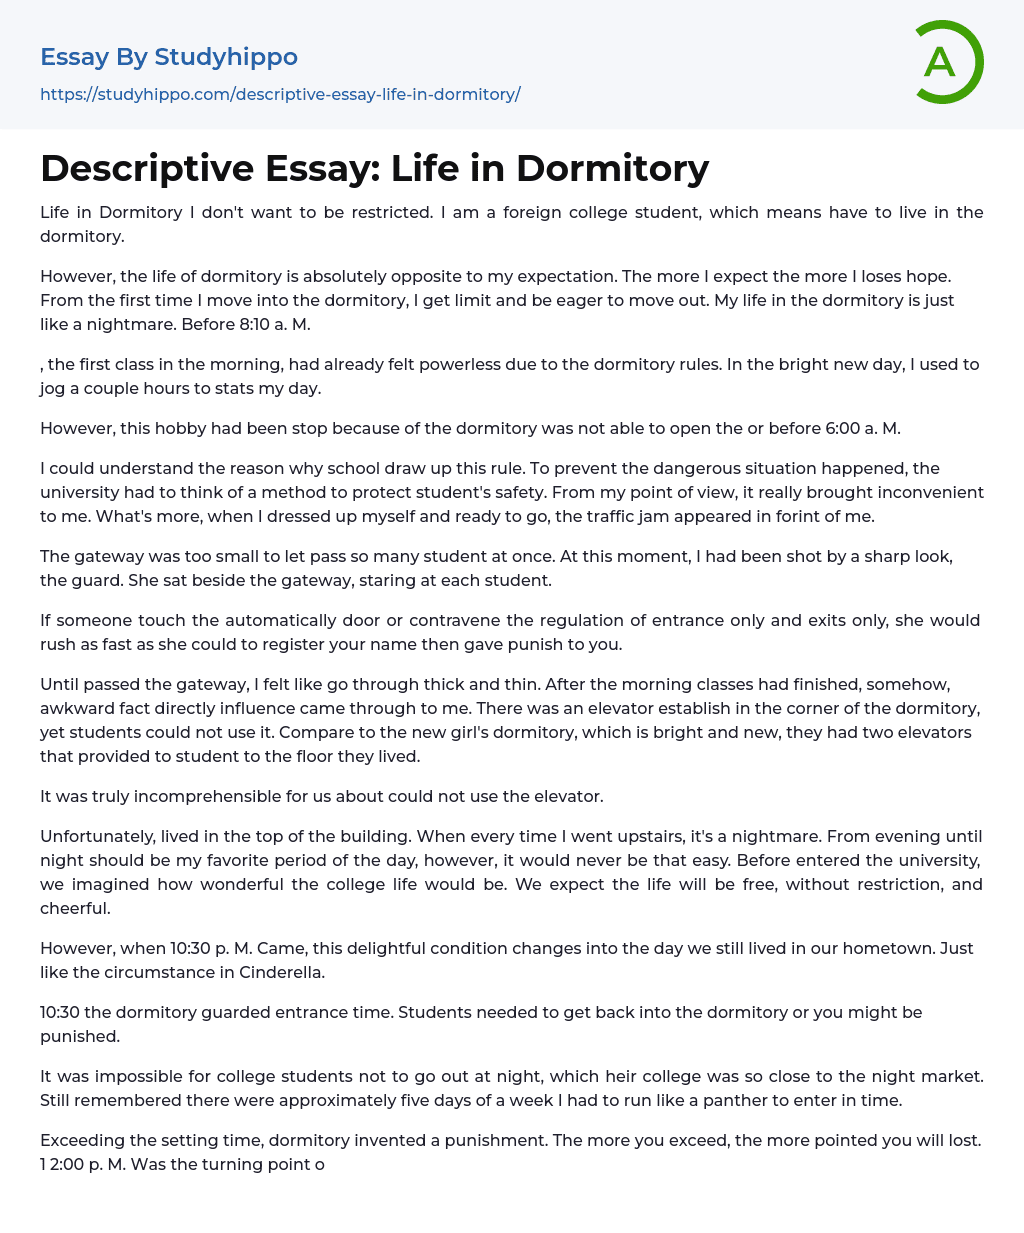 Descriptive Essay: Life in Dormitory